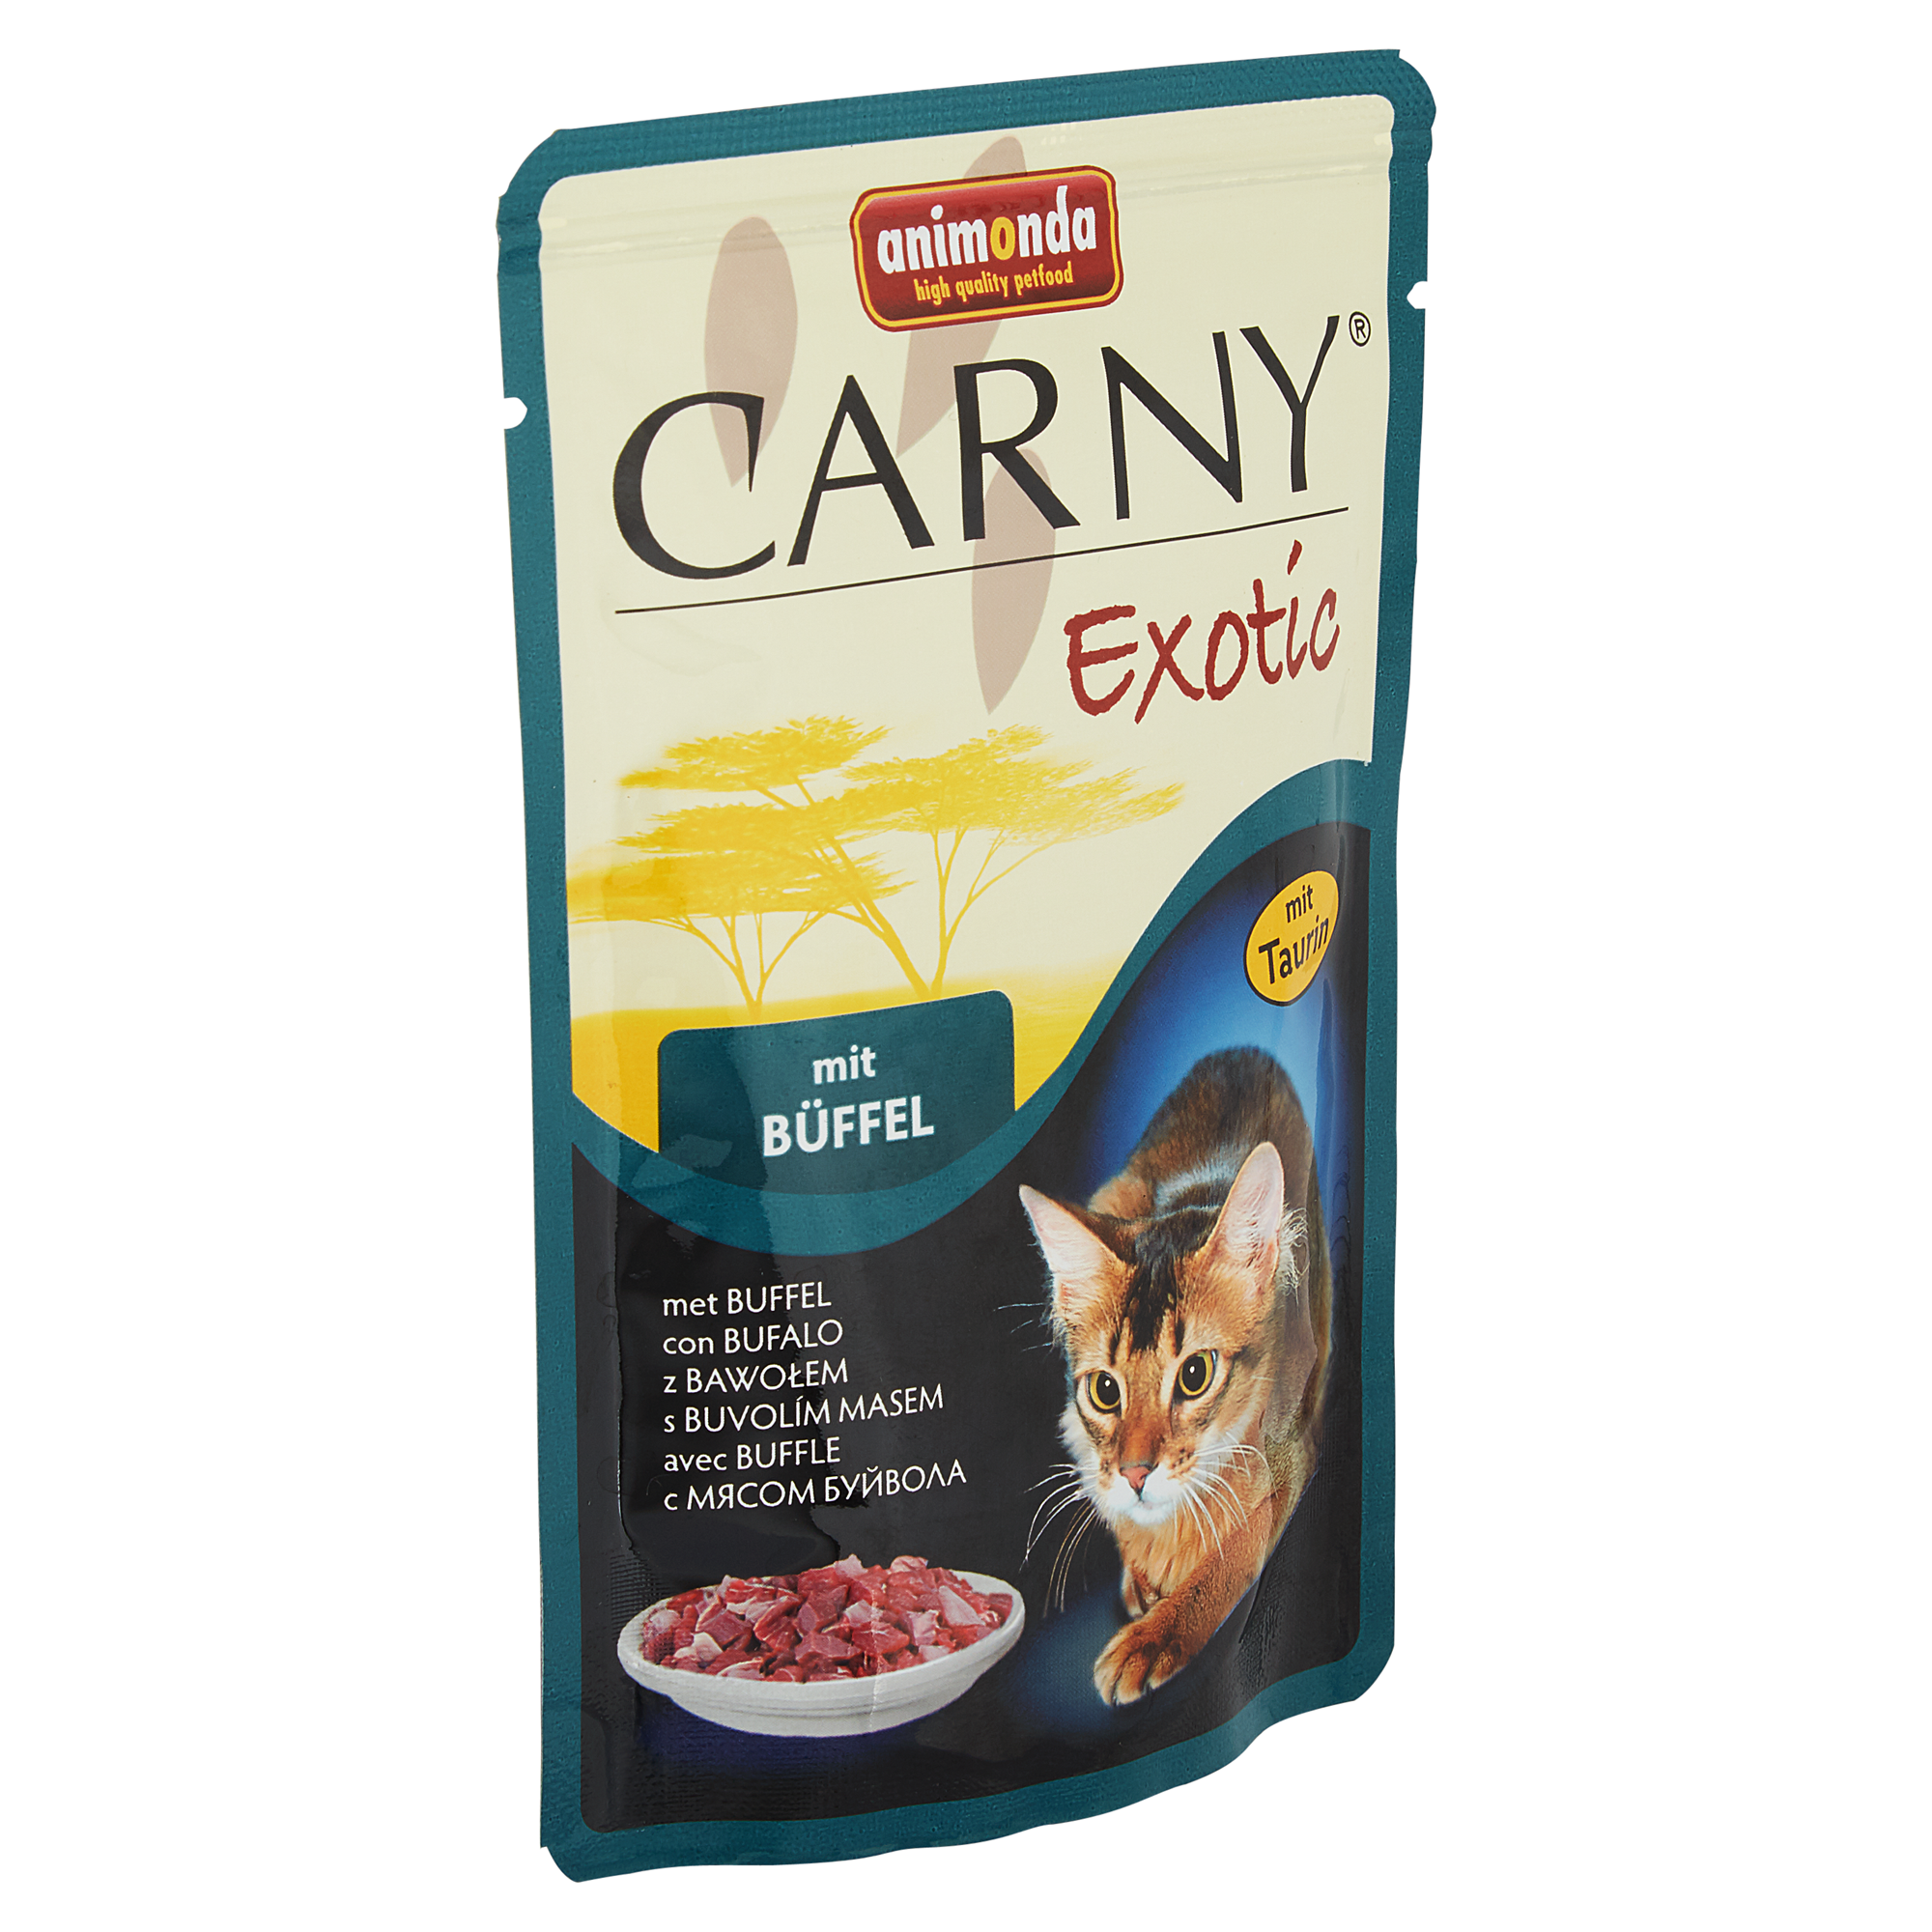 Katzennassfutter "Carny" Exotic mit Büffel 85 g + product picture